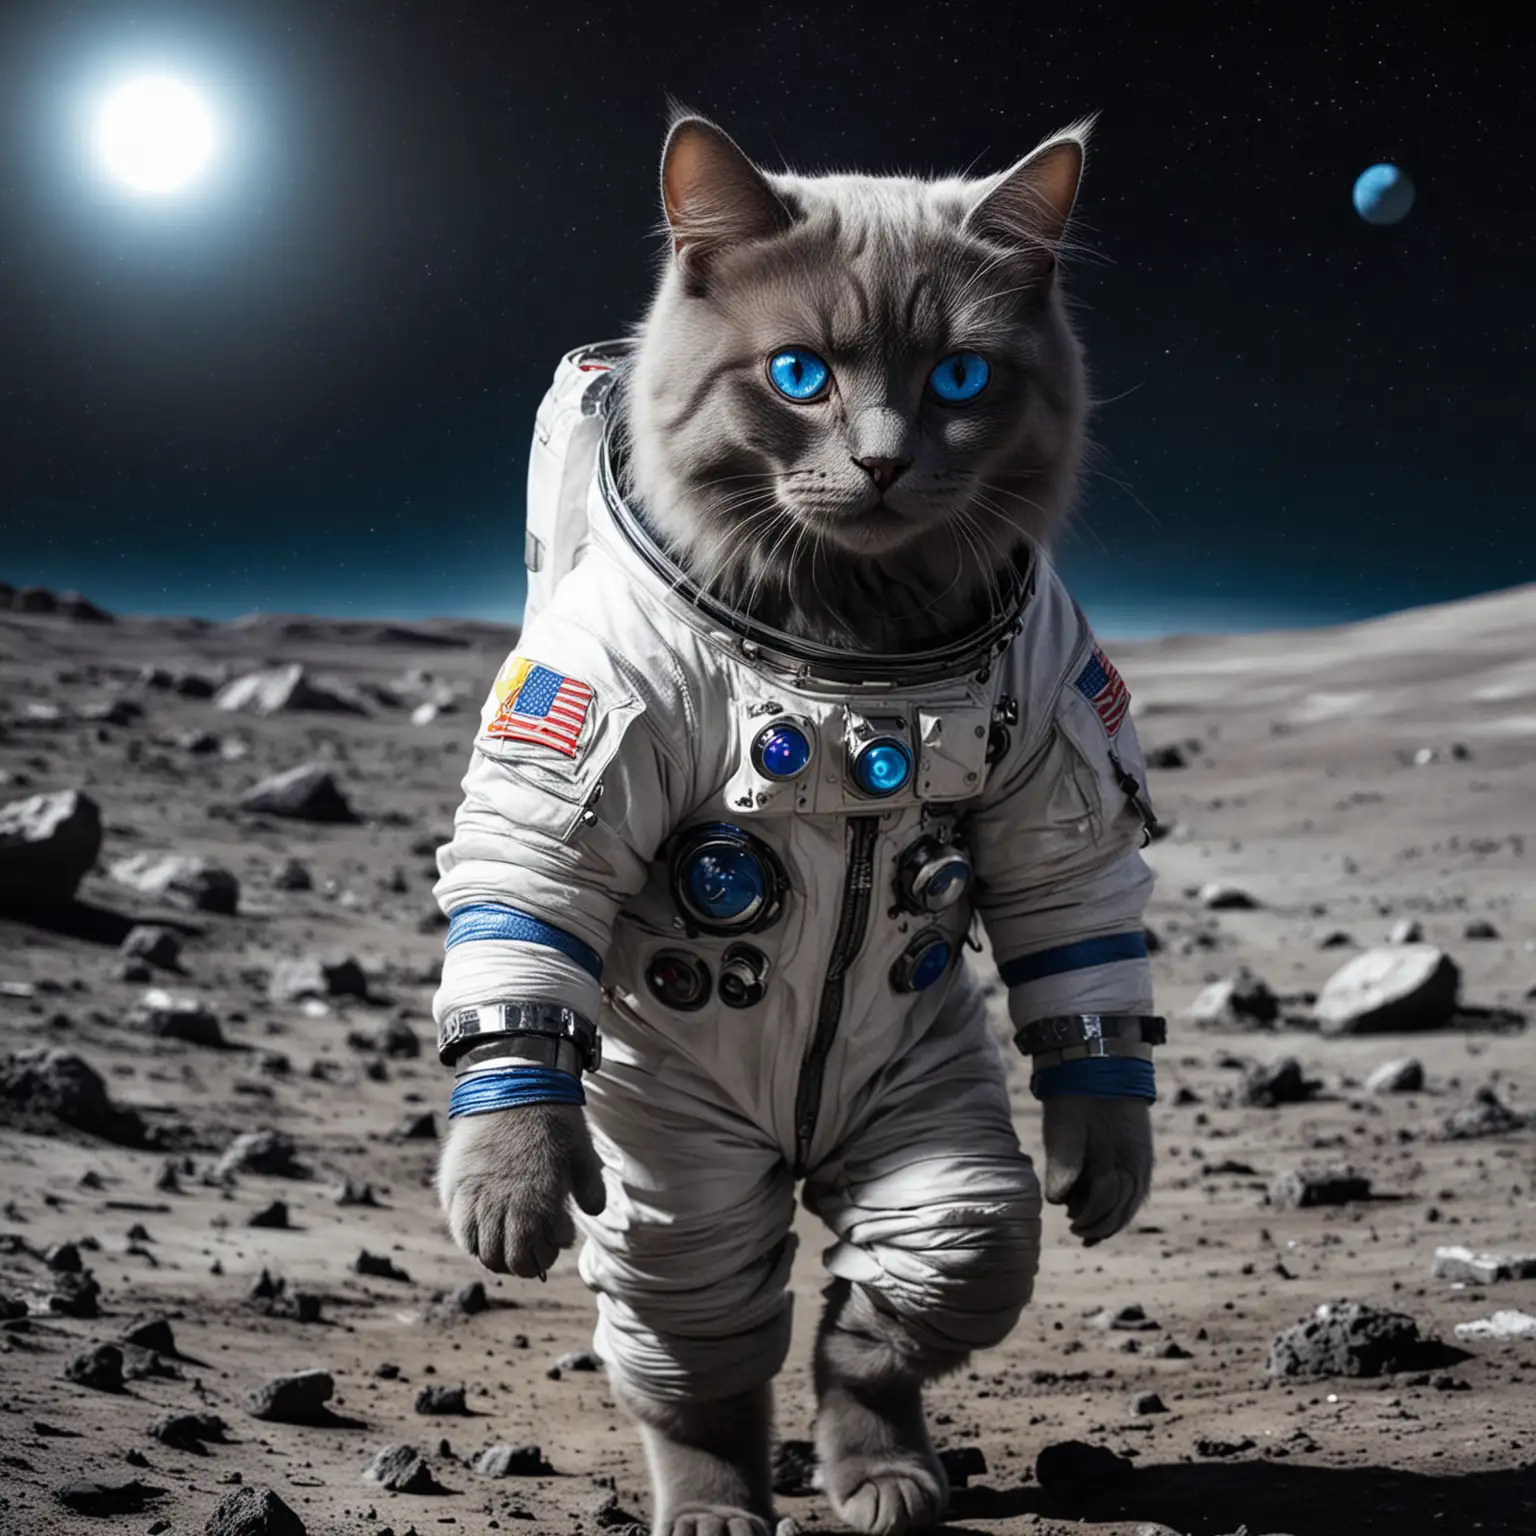 Spacewalking-Cat-Dark-Gray-Feline-Explores-the-Moon-in-a-Spacesuit